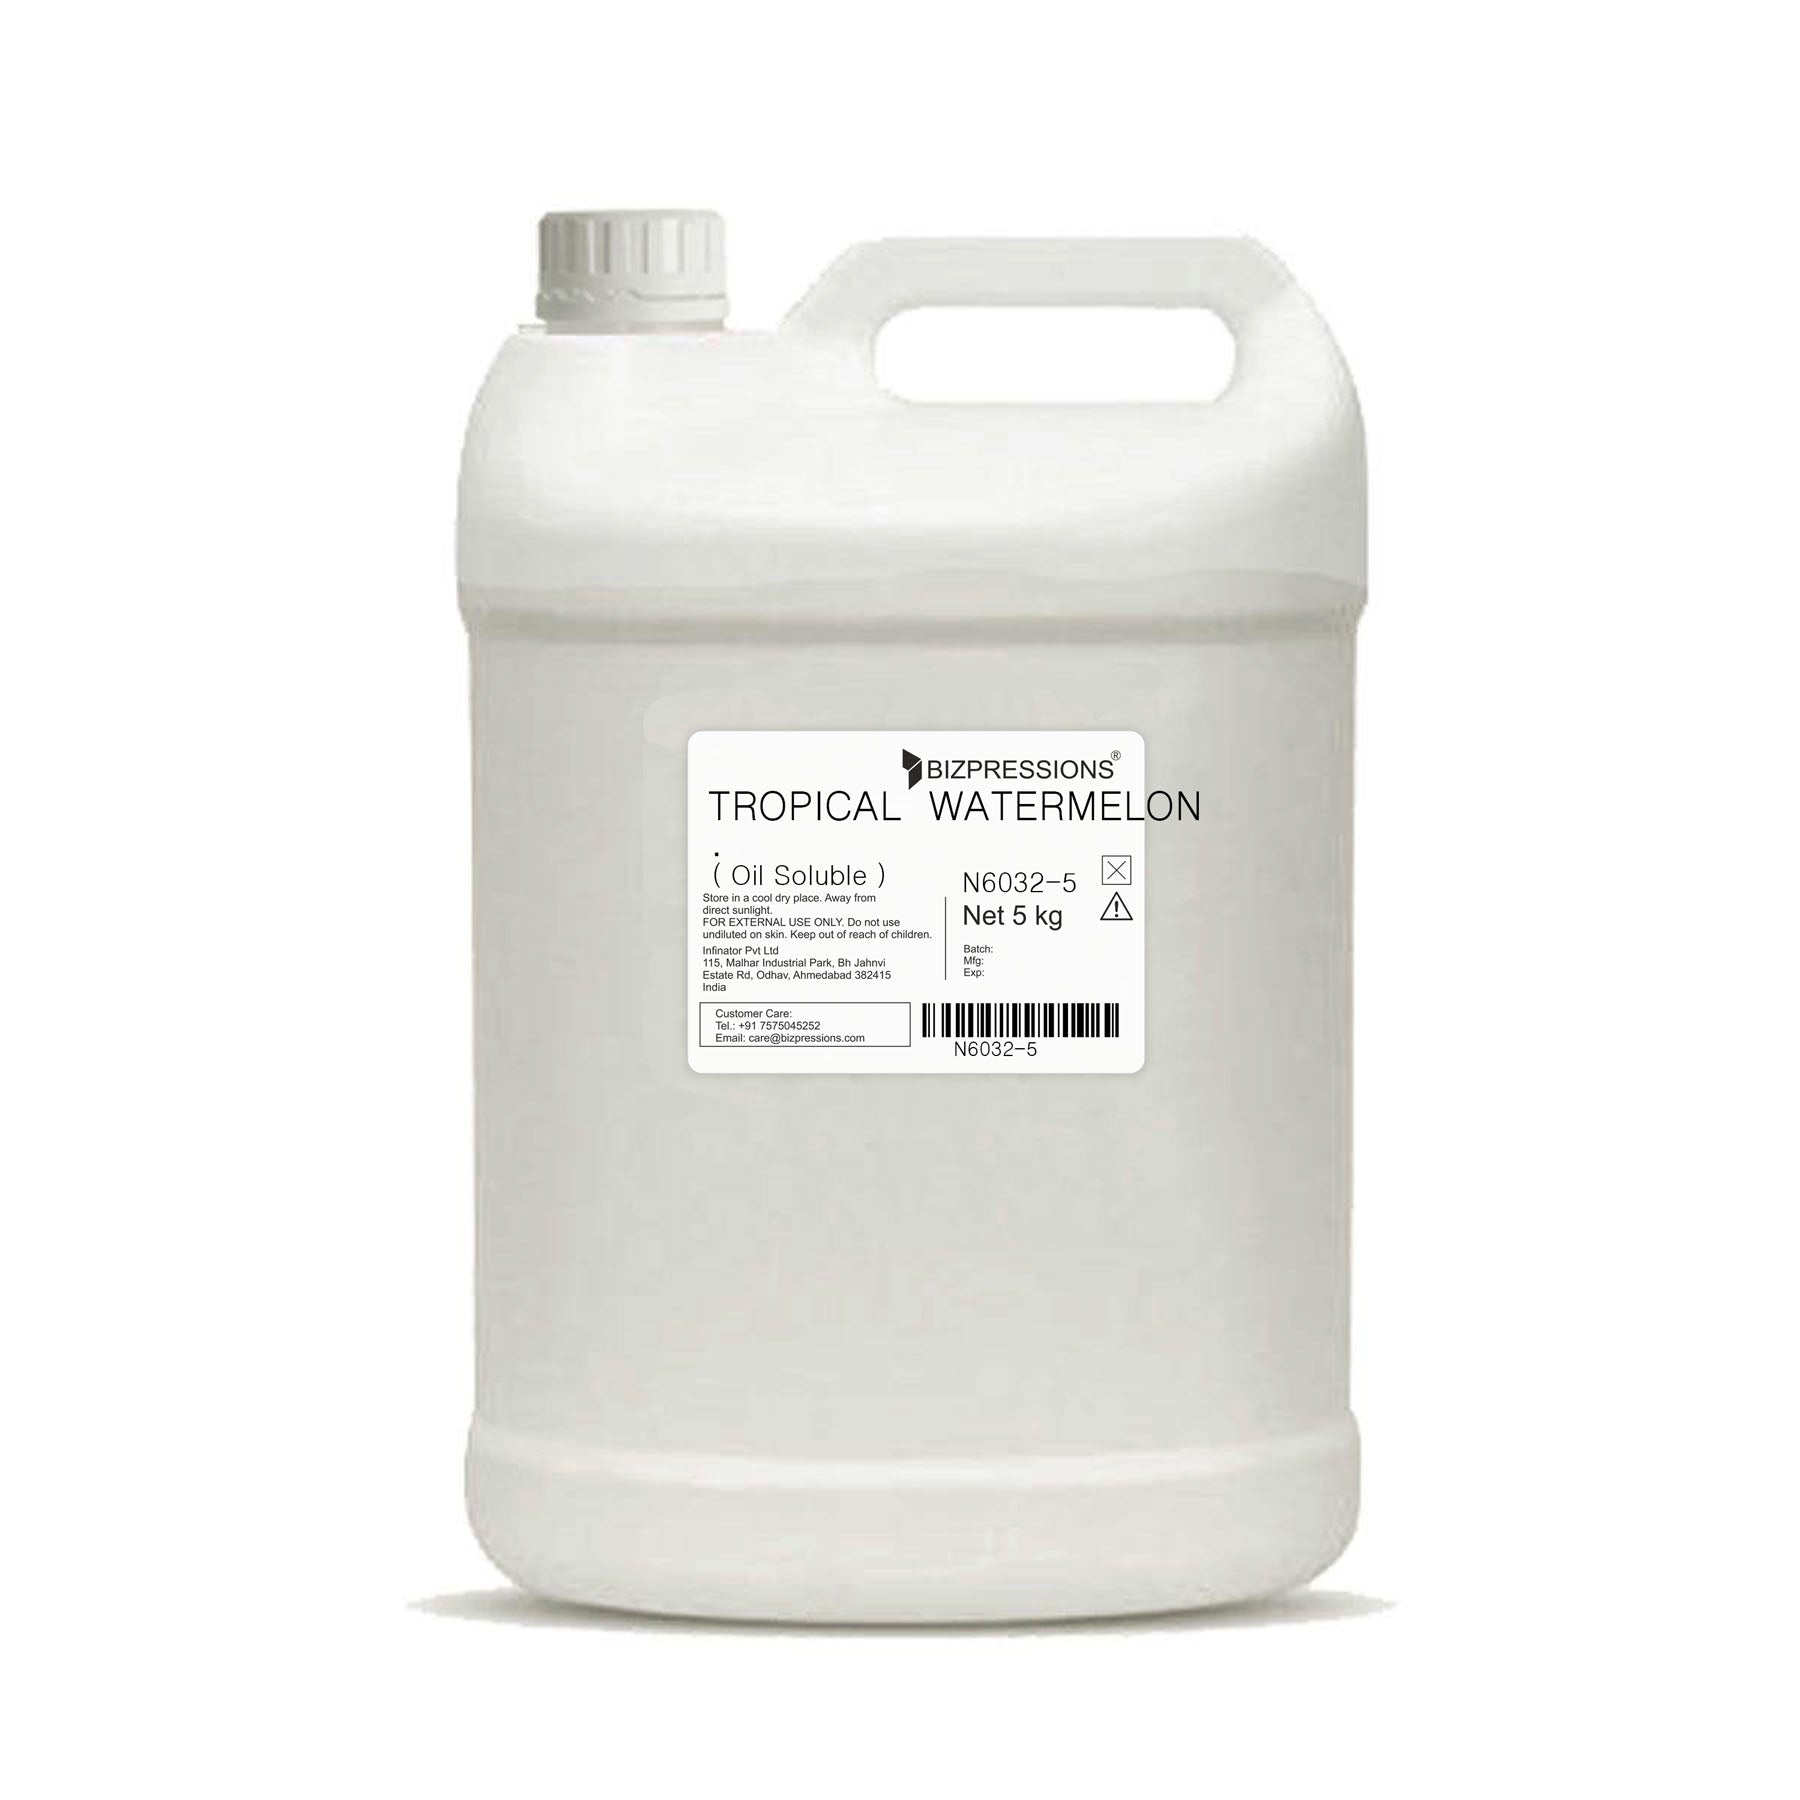 TROPICAL WATERMELON - Fragrance ( Oil Soluble ) - 5 kg